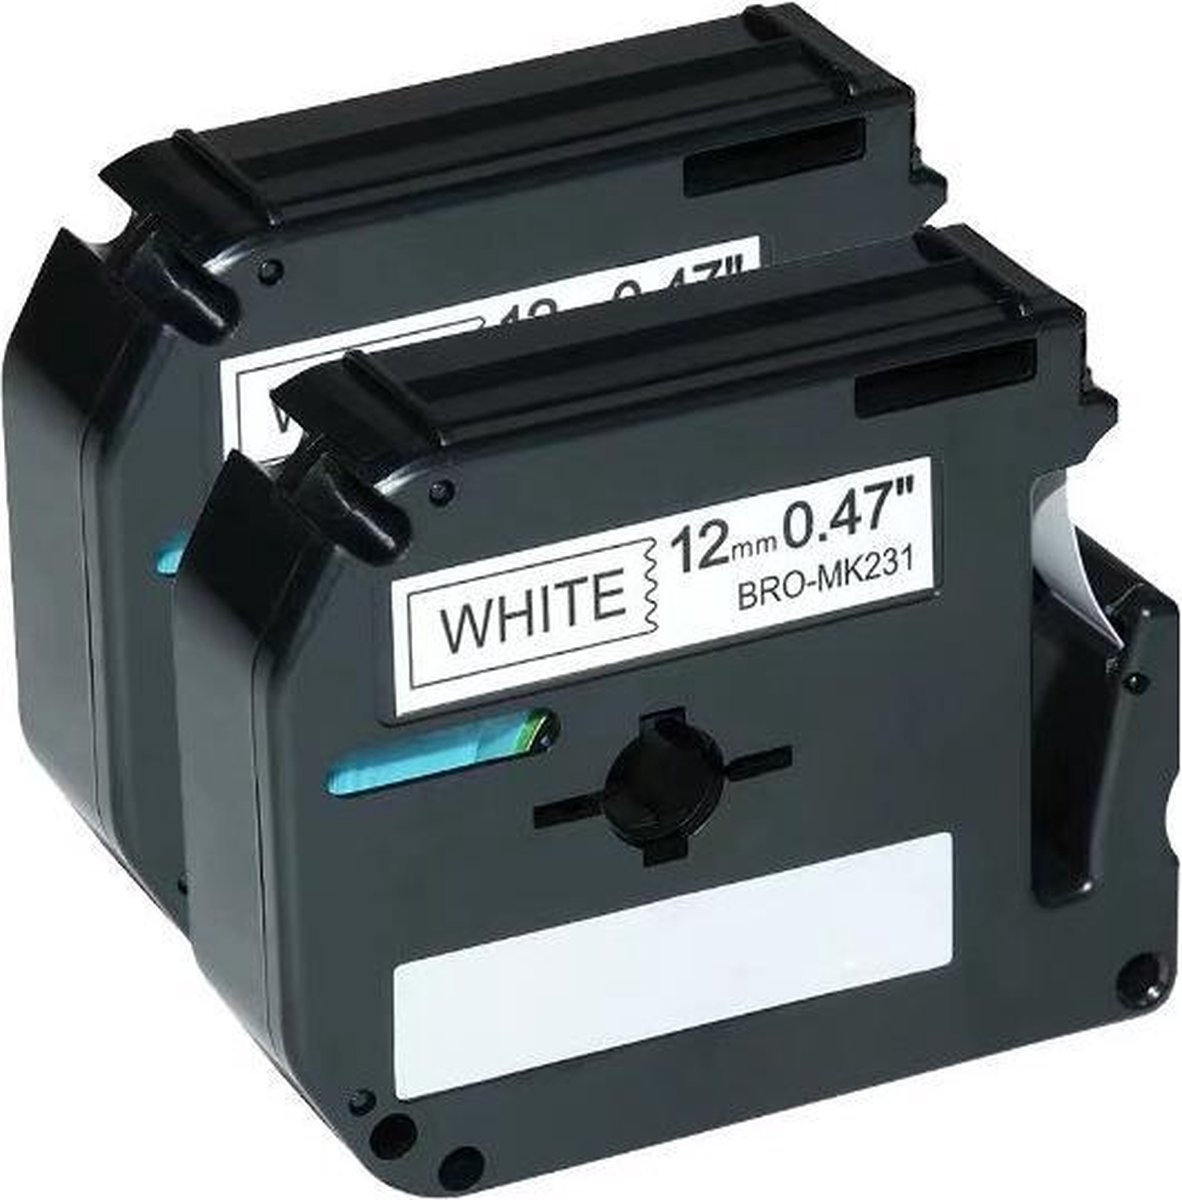 2x Compatible Label Tape M-K231 / MK231 Zwart op Wit (12mm x 8m) | voor Brother PT-55, PT-60, PT-65, PT-75, PT-80, PT-85, PT-90, PT-110, BB4 Label Printer